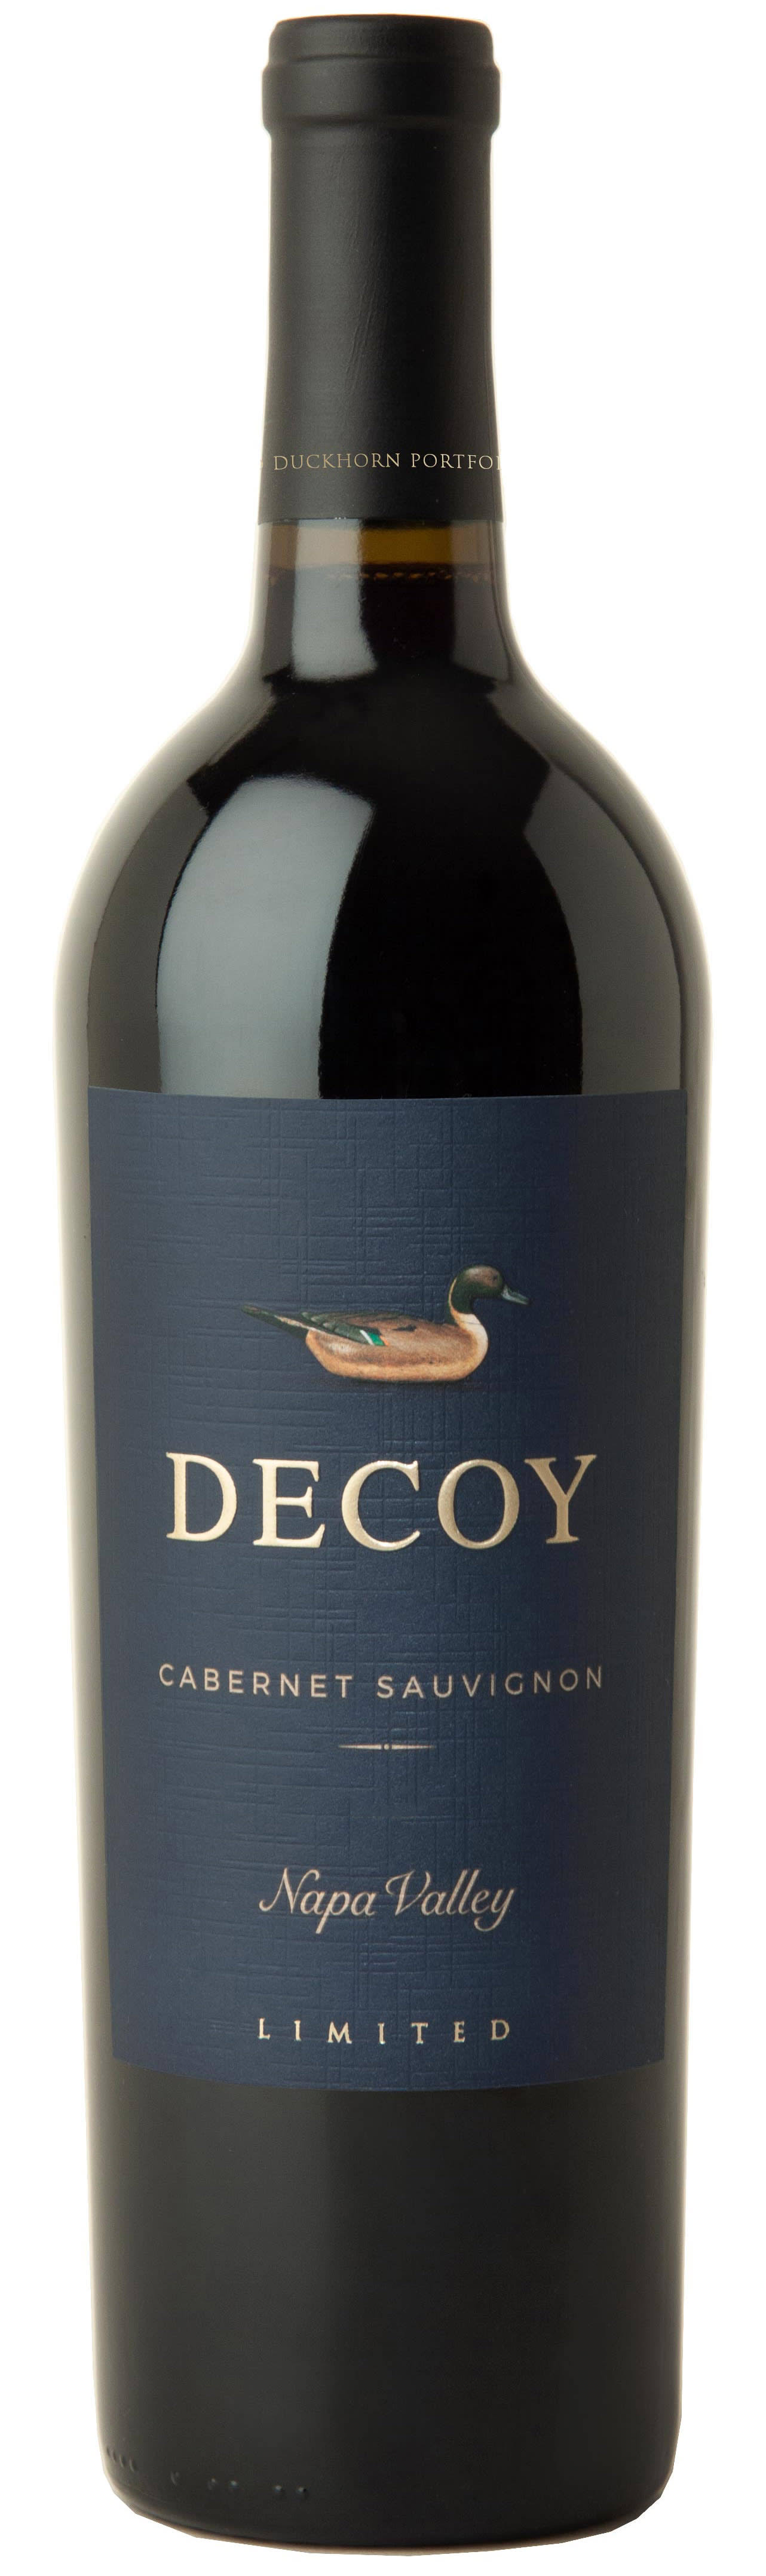 Decoy Limited NAPA Valley Cabernet Sauvignon 2019 (750 ml)